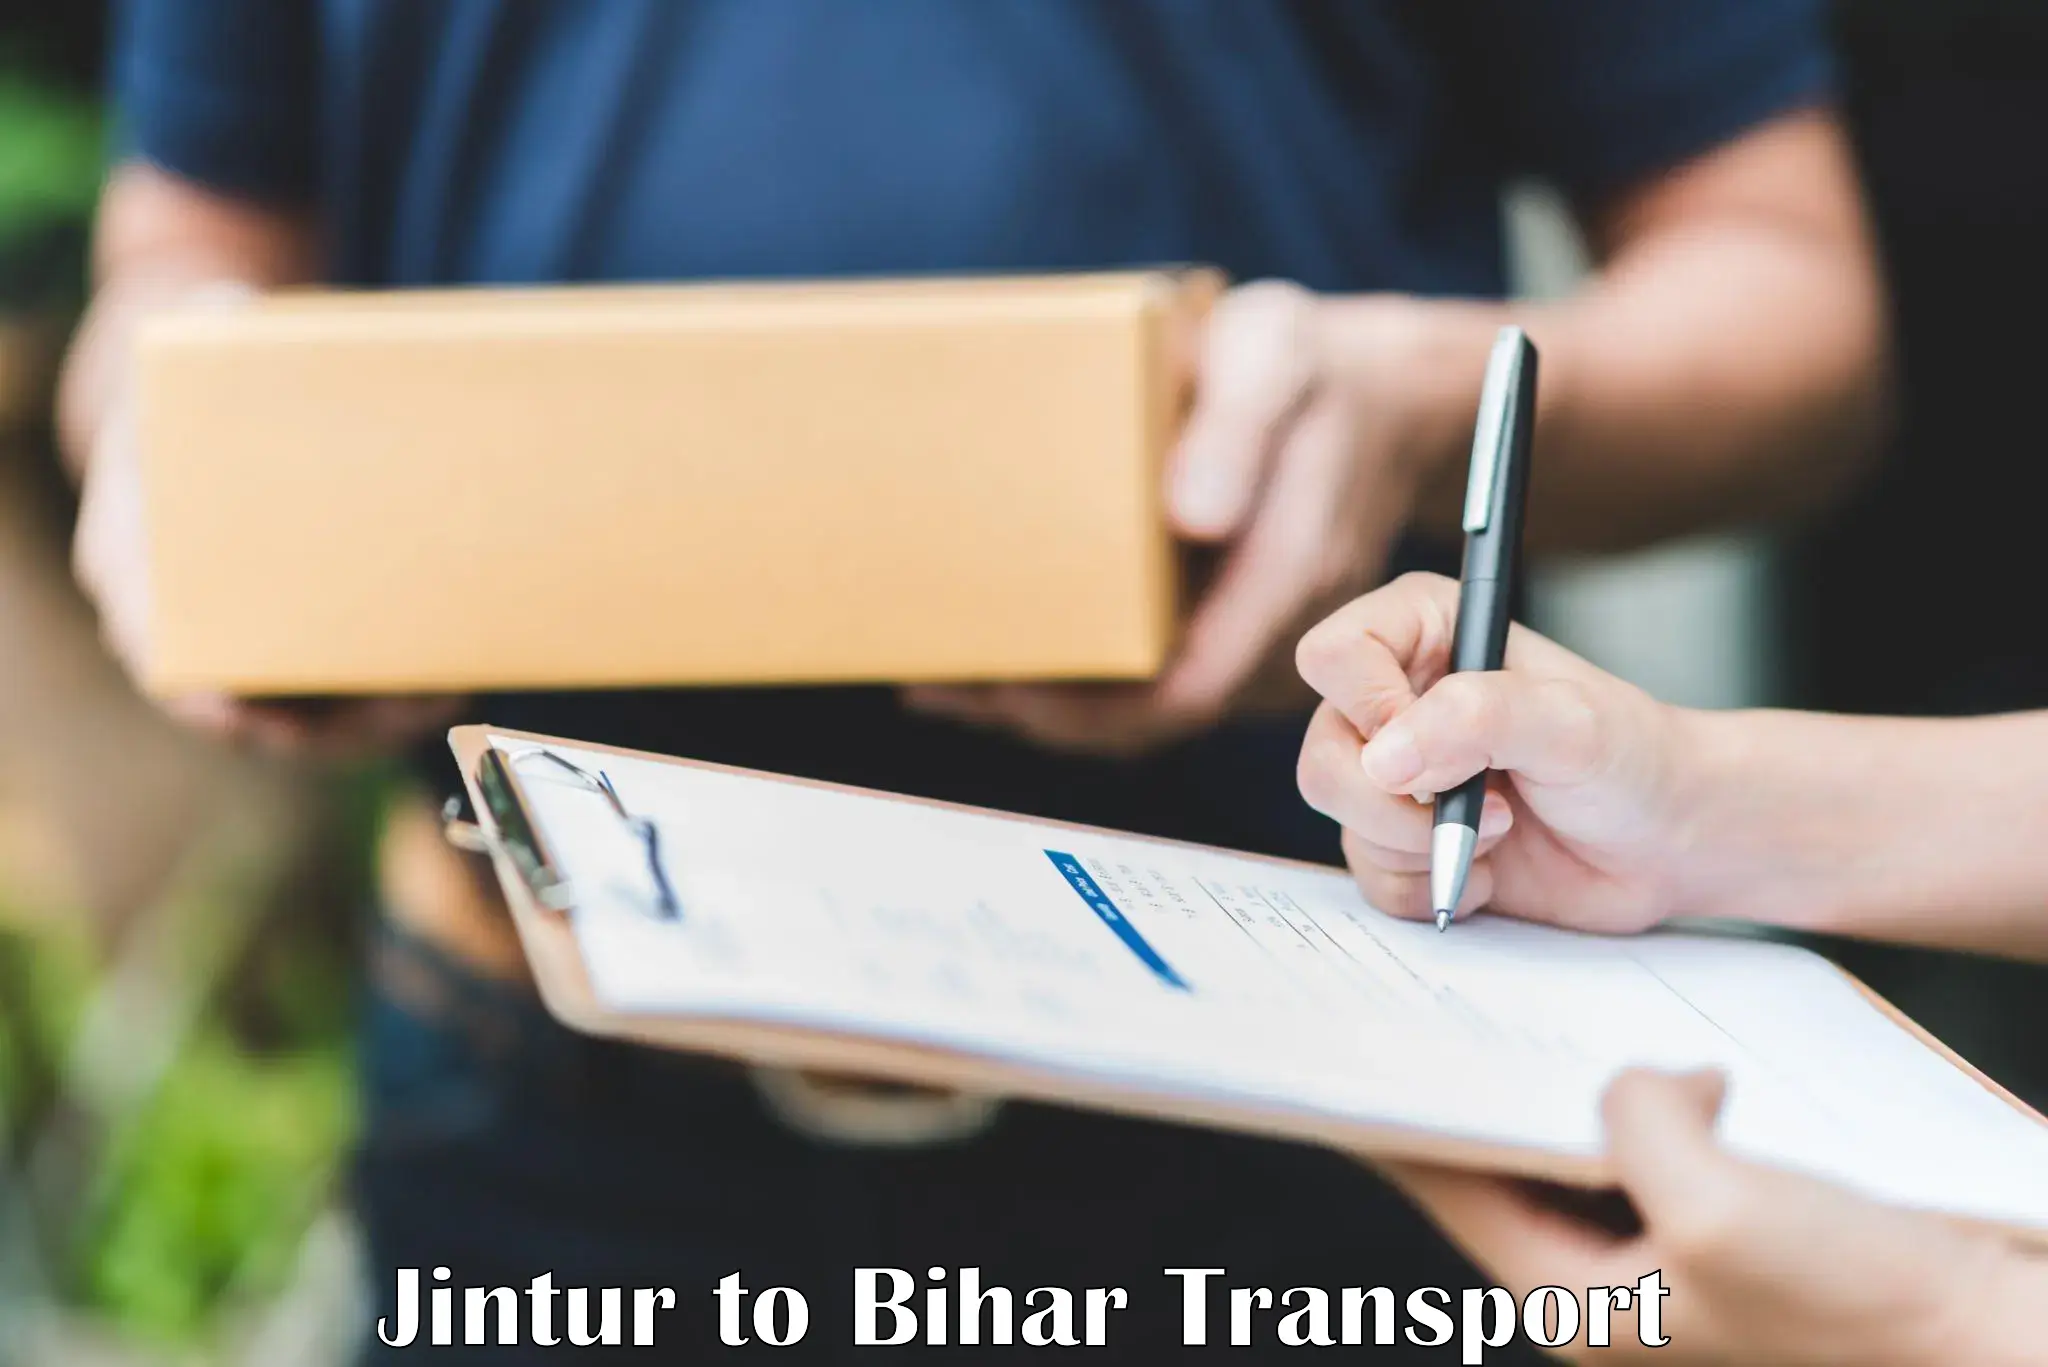 Daily transport service Jintur to Piro